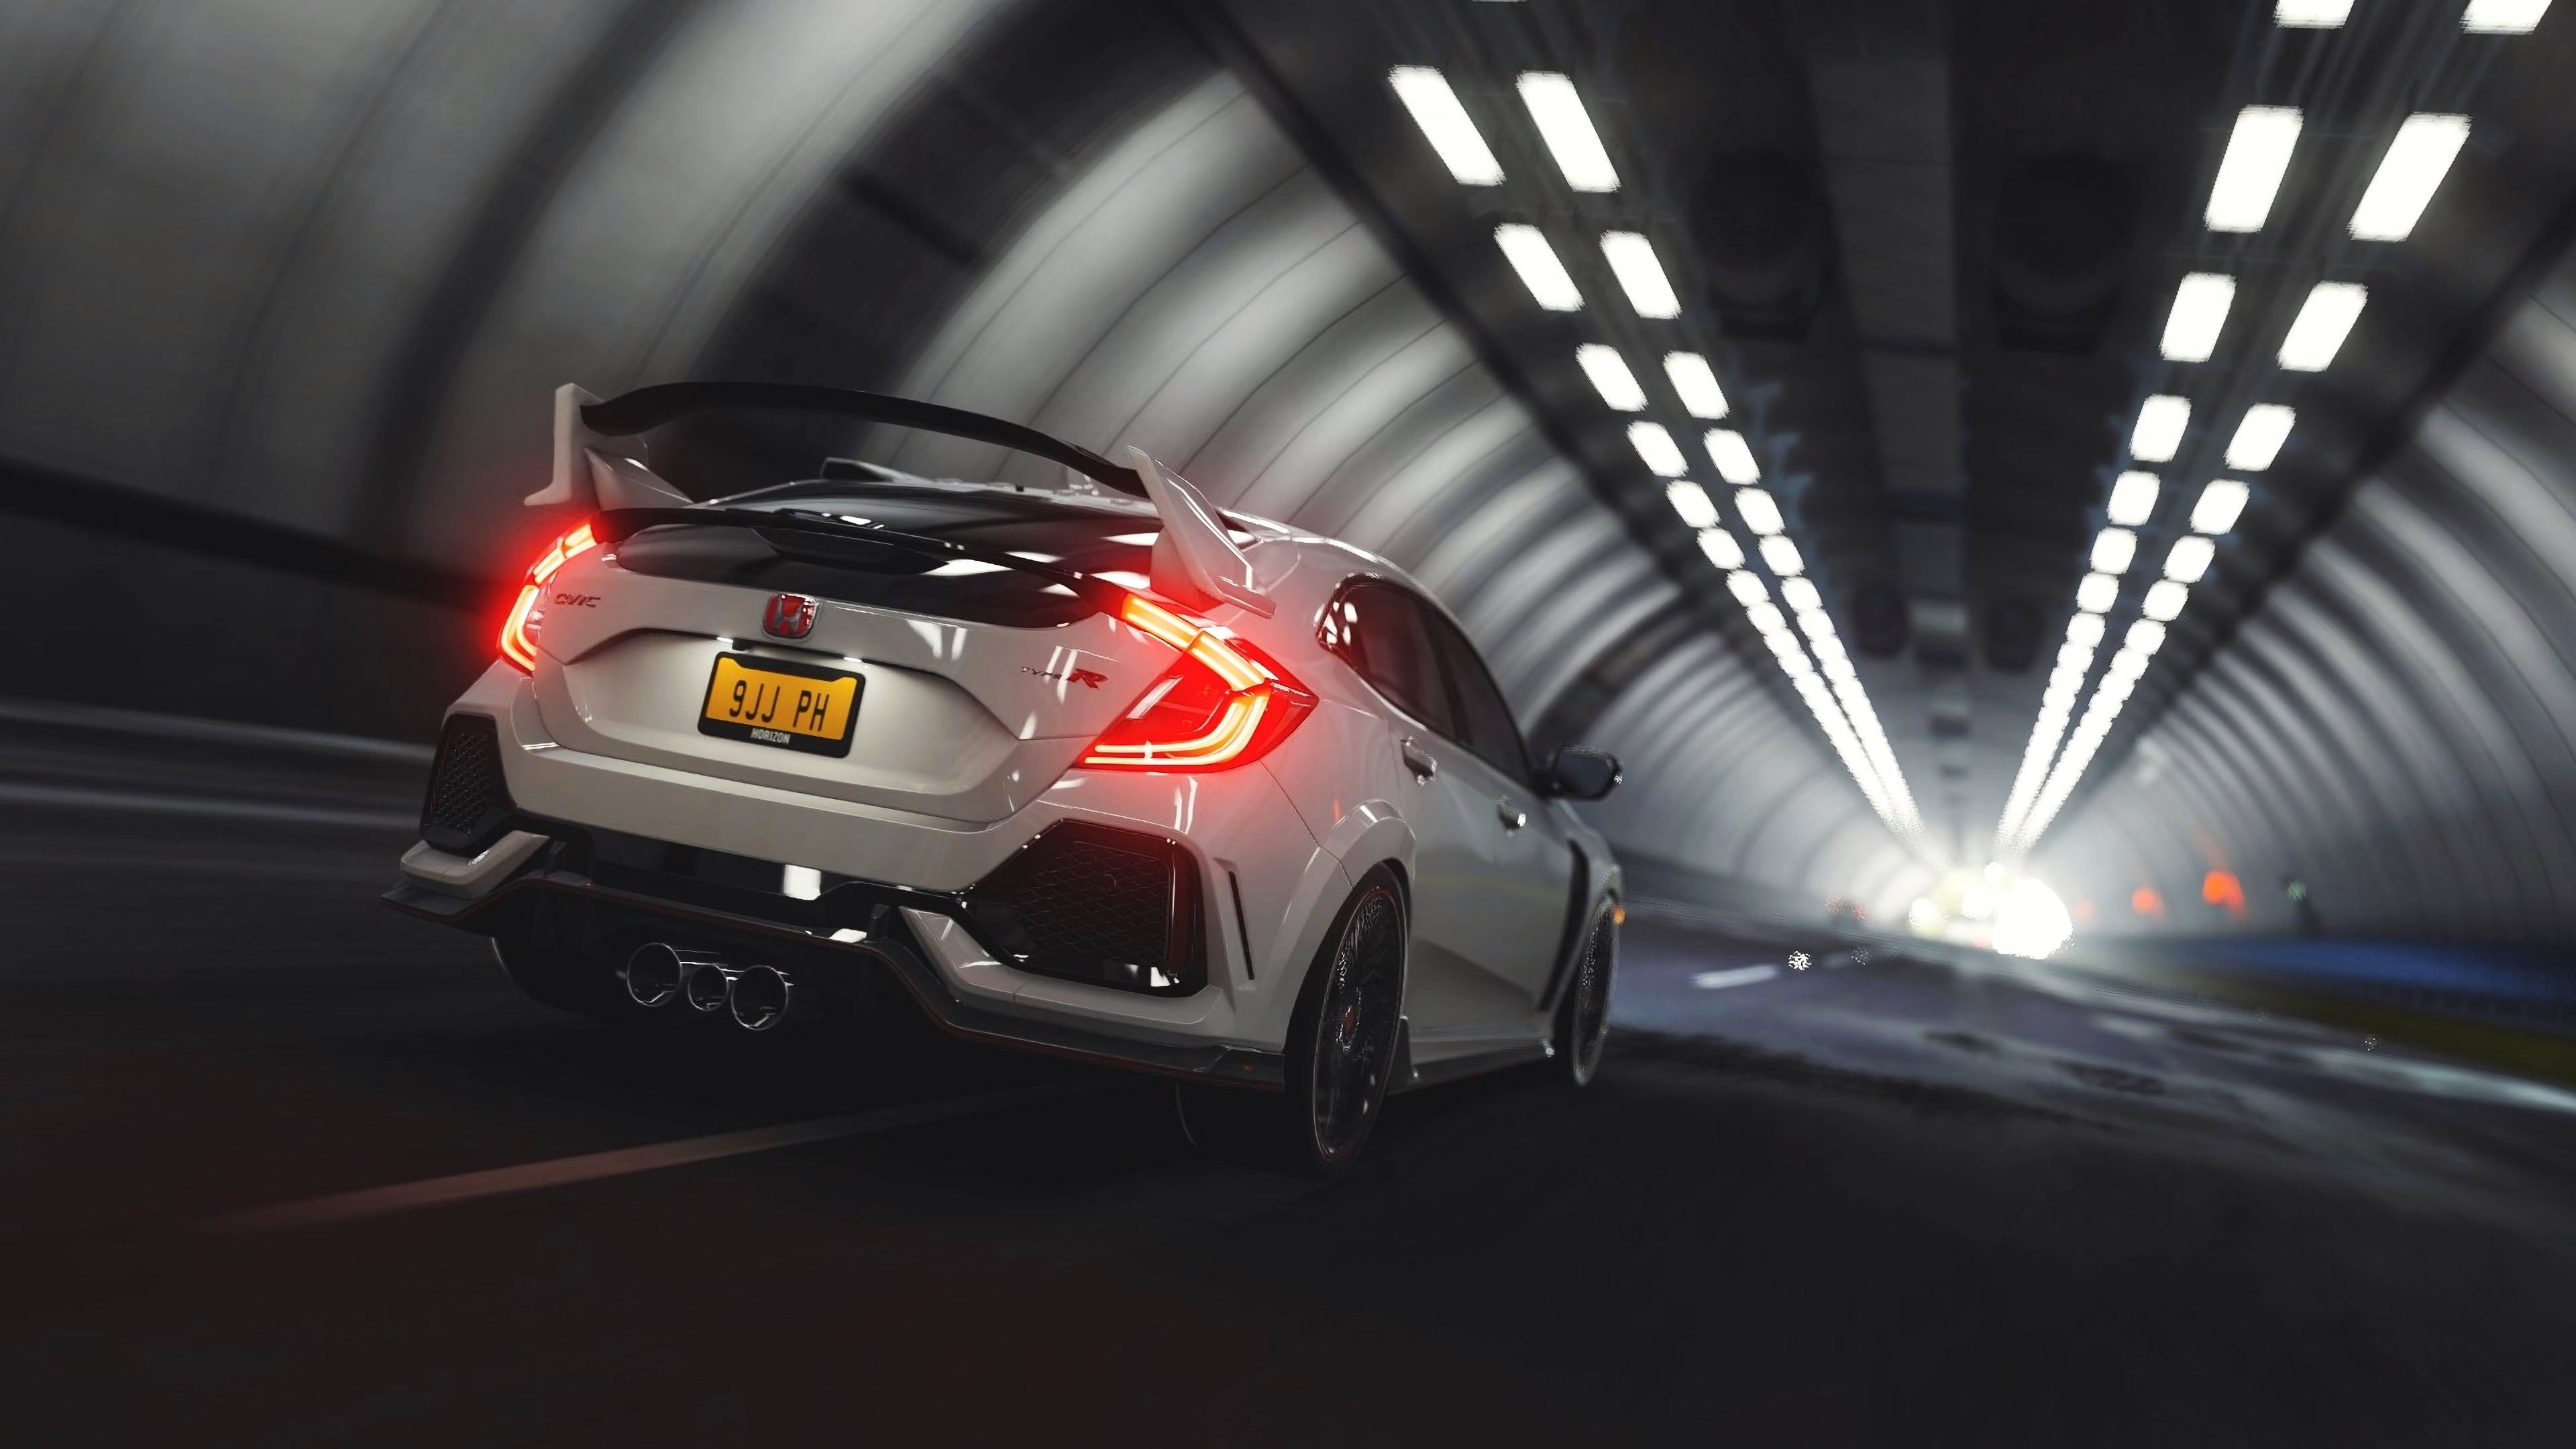 Honda Civic Type R, Performance powerhouse, Tunnel racer, Captivating wallpaper, 3840x2160 4K Desktop